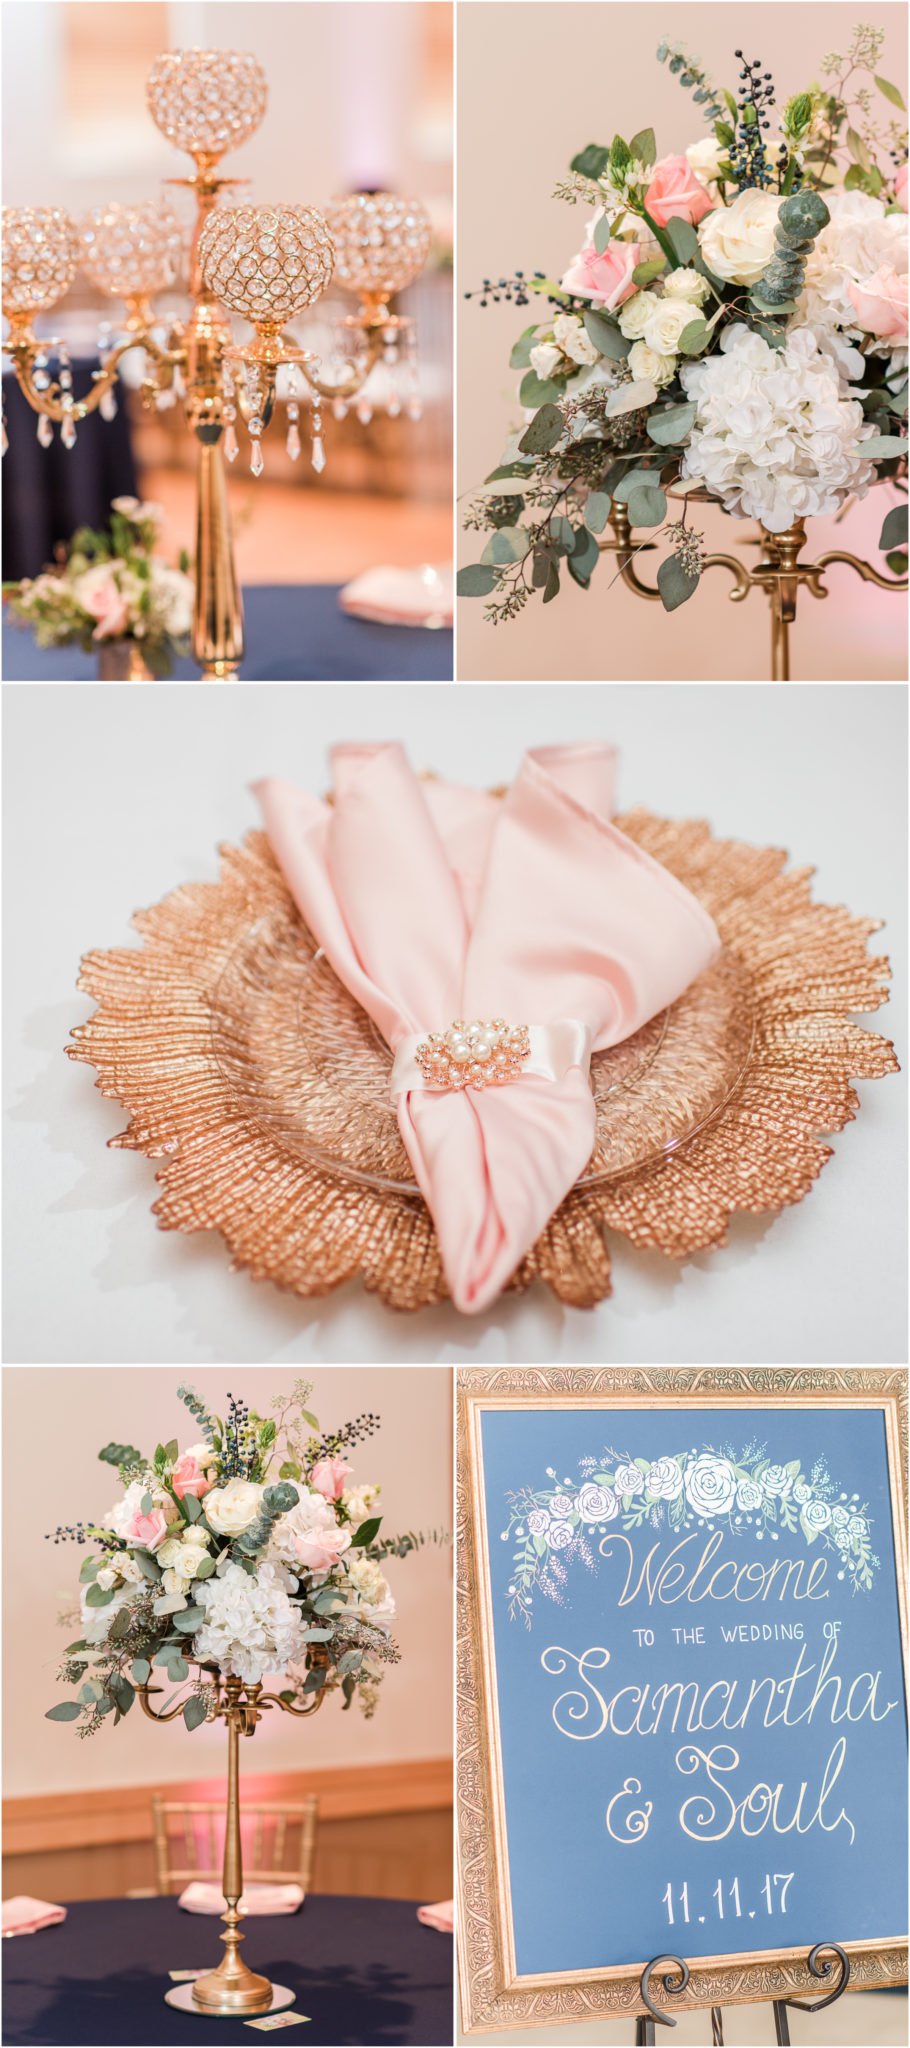 An Elegant Blush Wedding in Greenwood, SC Reception Details